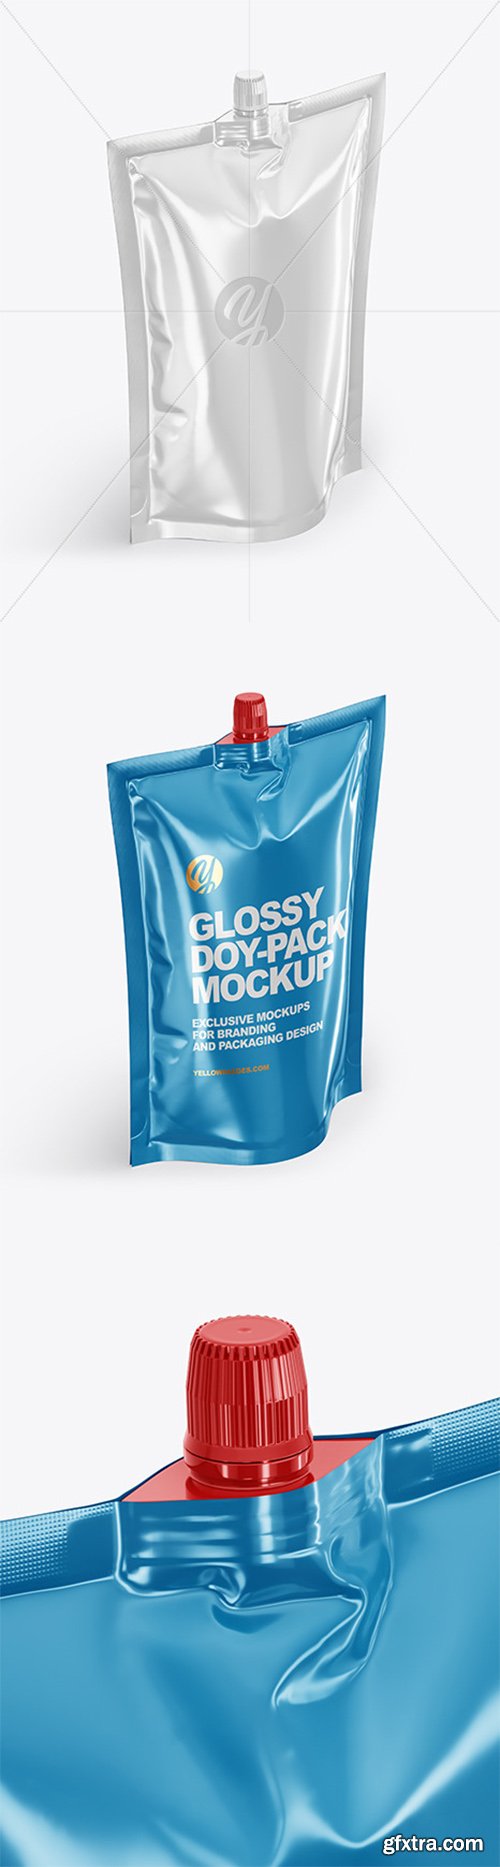 Glossy Doy-Pack Mockup 55431